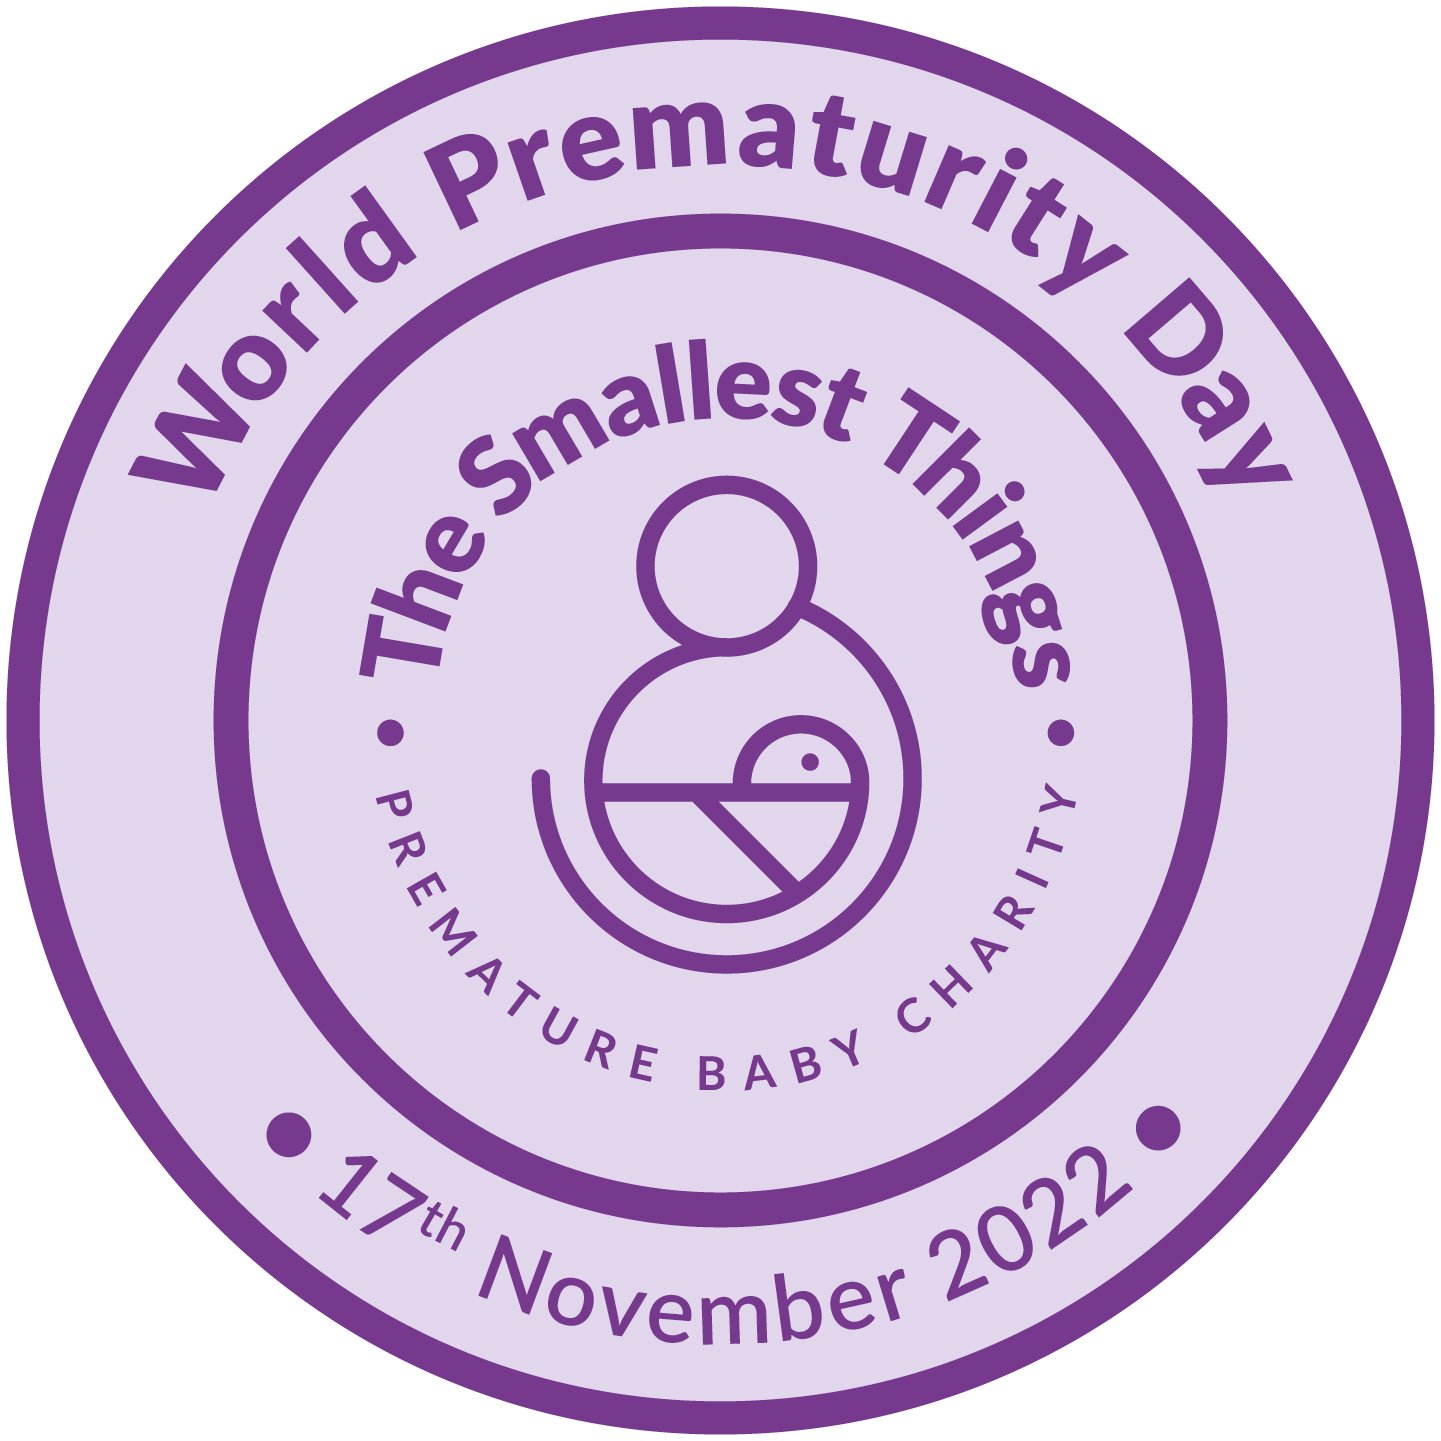 World Prematurity Day